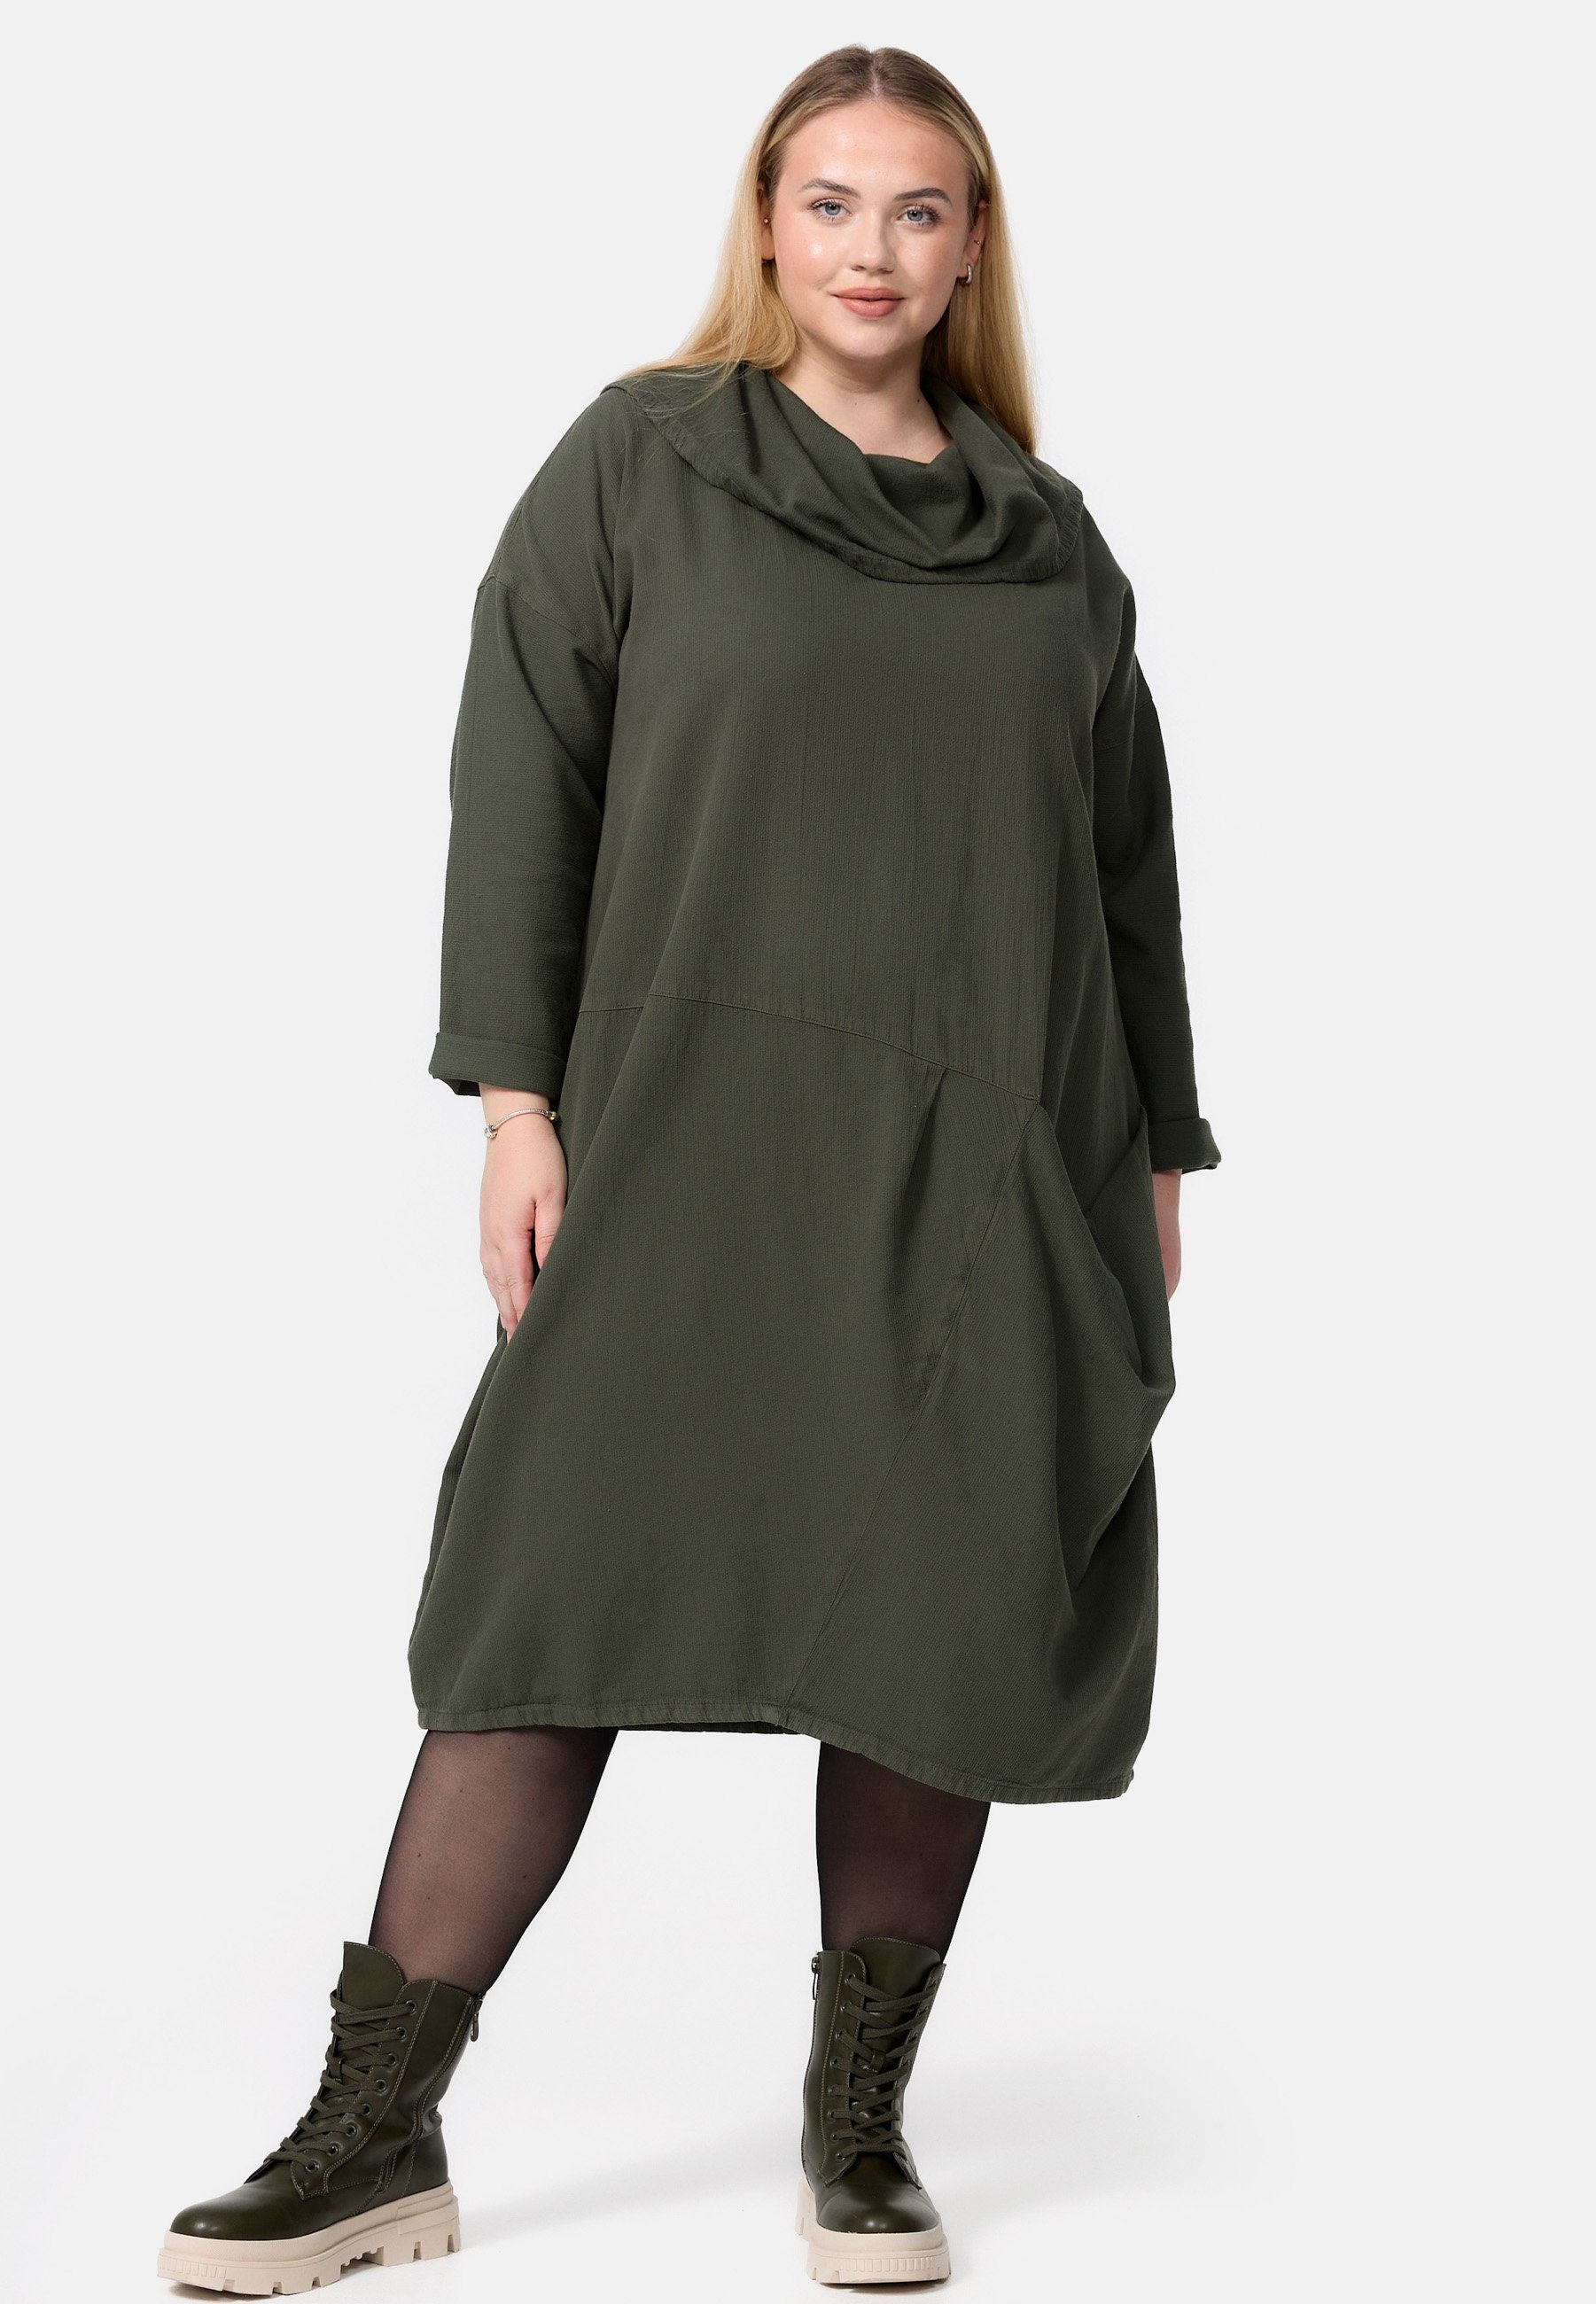 Kekoo A-Linien-Kleid Cord-Kleid in aus 100% A-Linie 'Sienna' Khaki Baumwolle